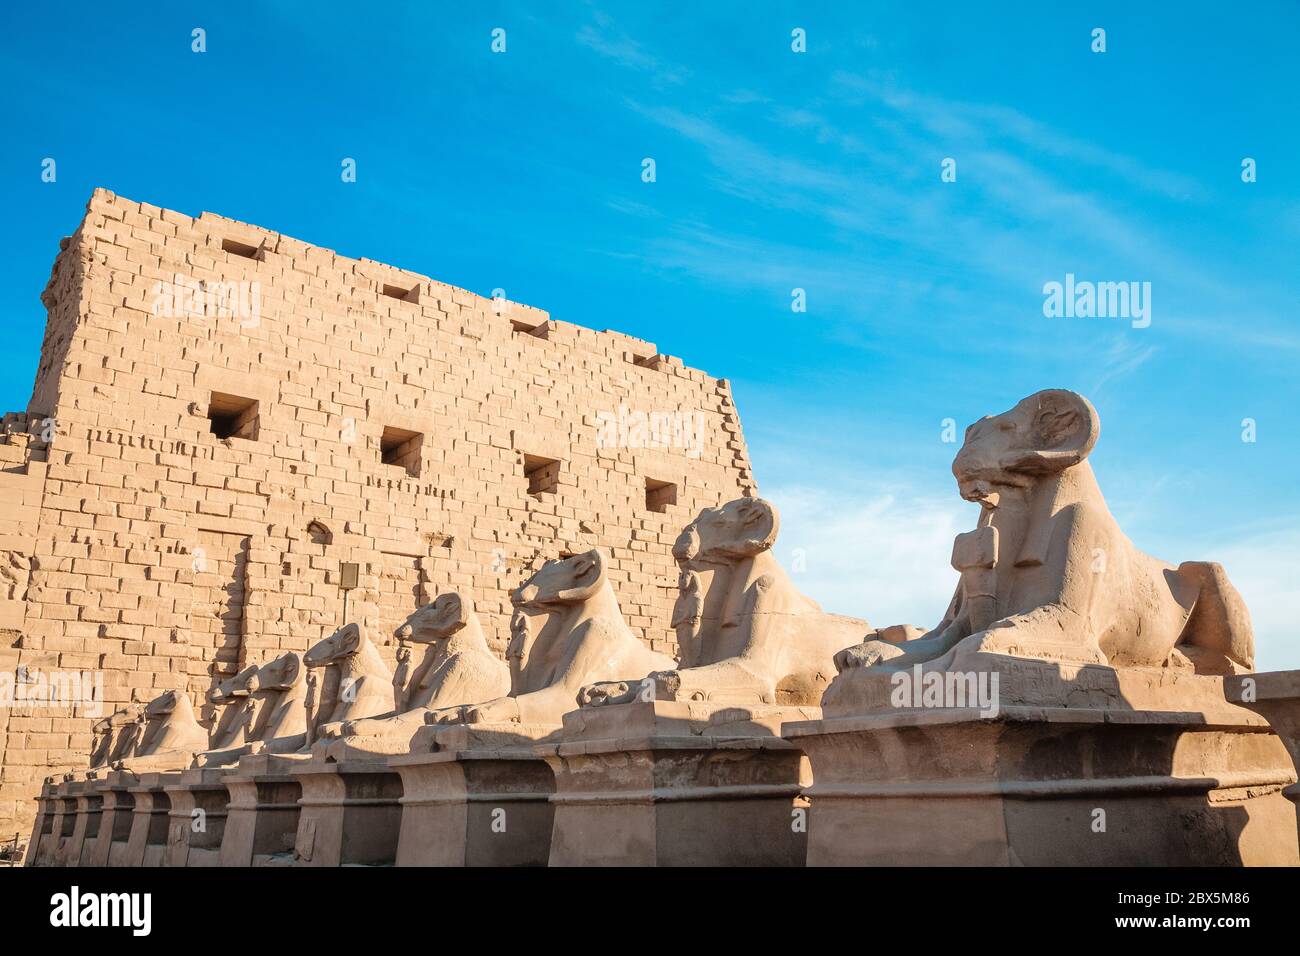 Ram-headed sphinxes in Karnak Temple complex, Luxor, Egypt Stock Photo